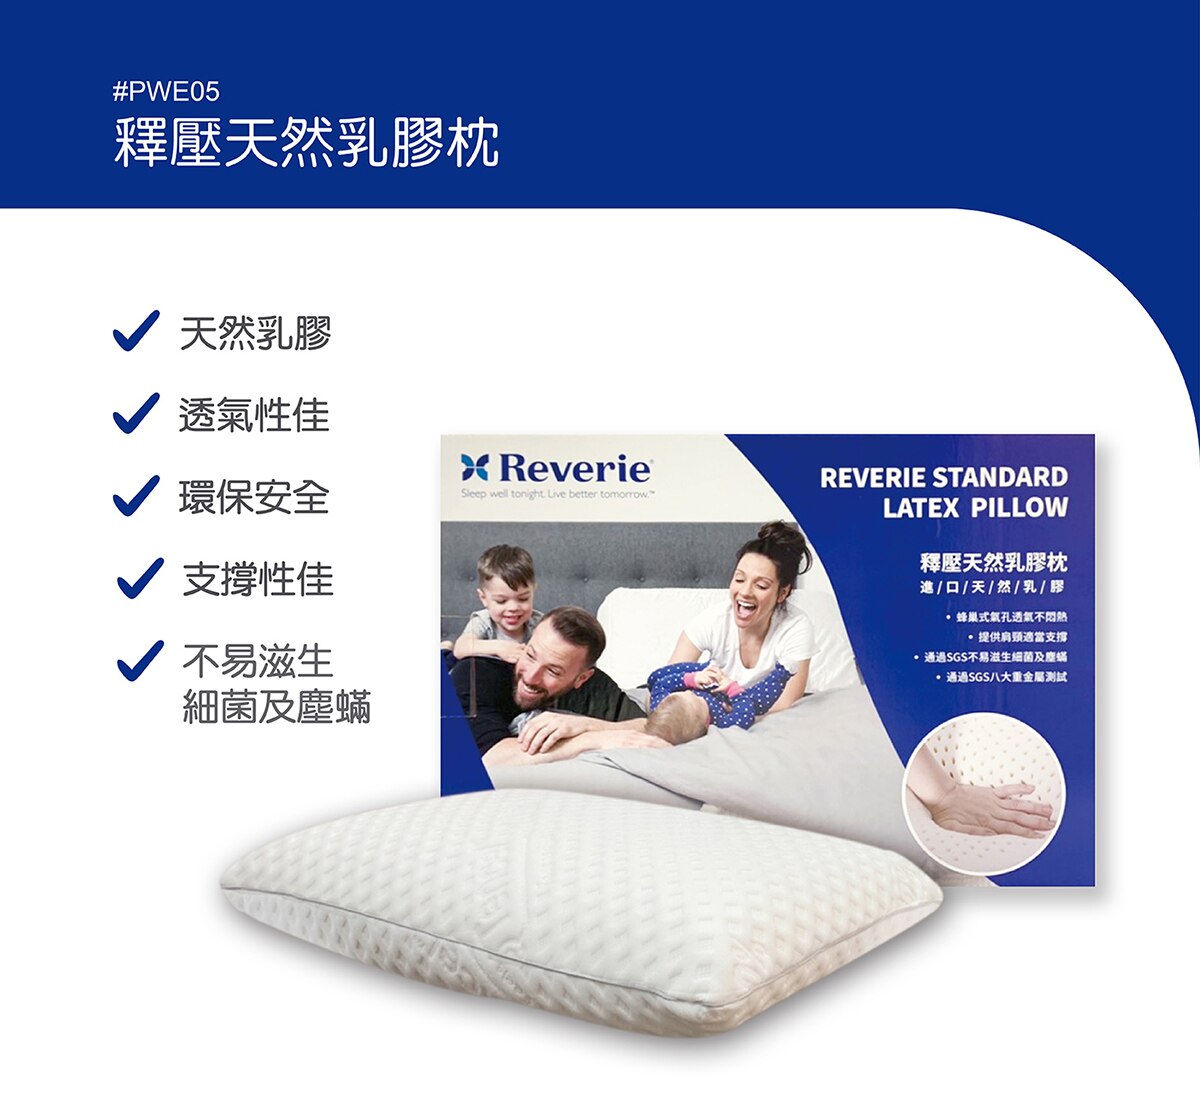 Reverie 釋壓天然乳膠枕 天然乳膠 透氣性佳 環保安全